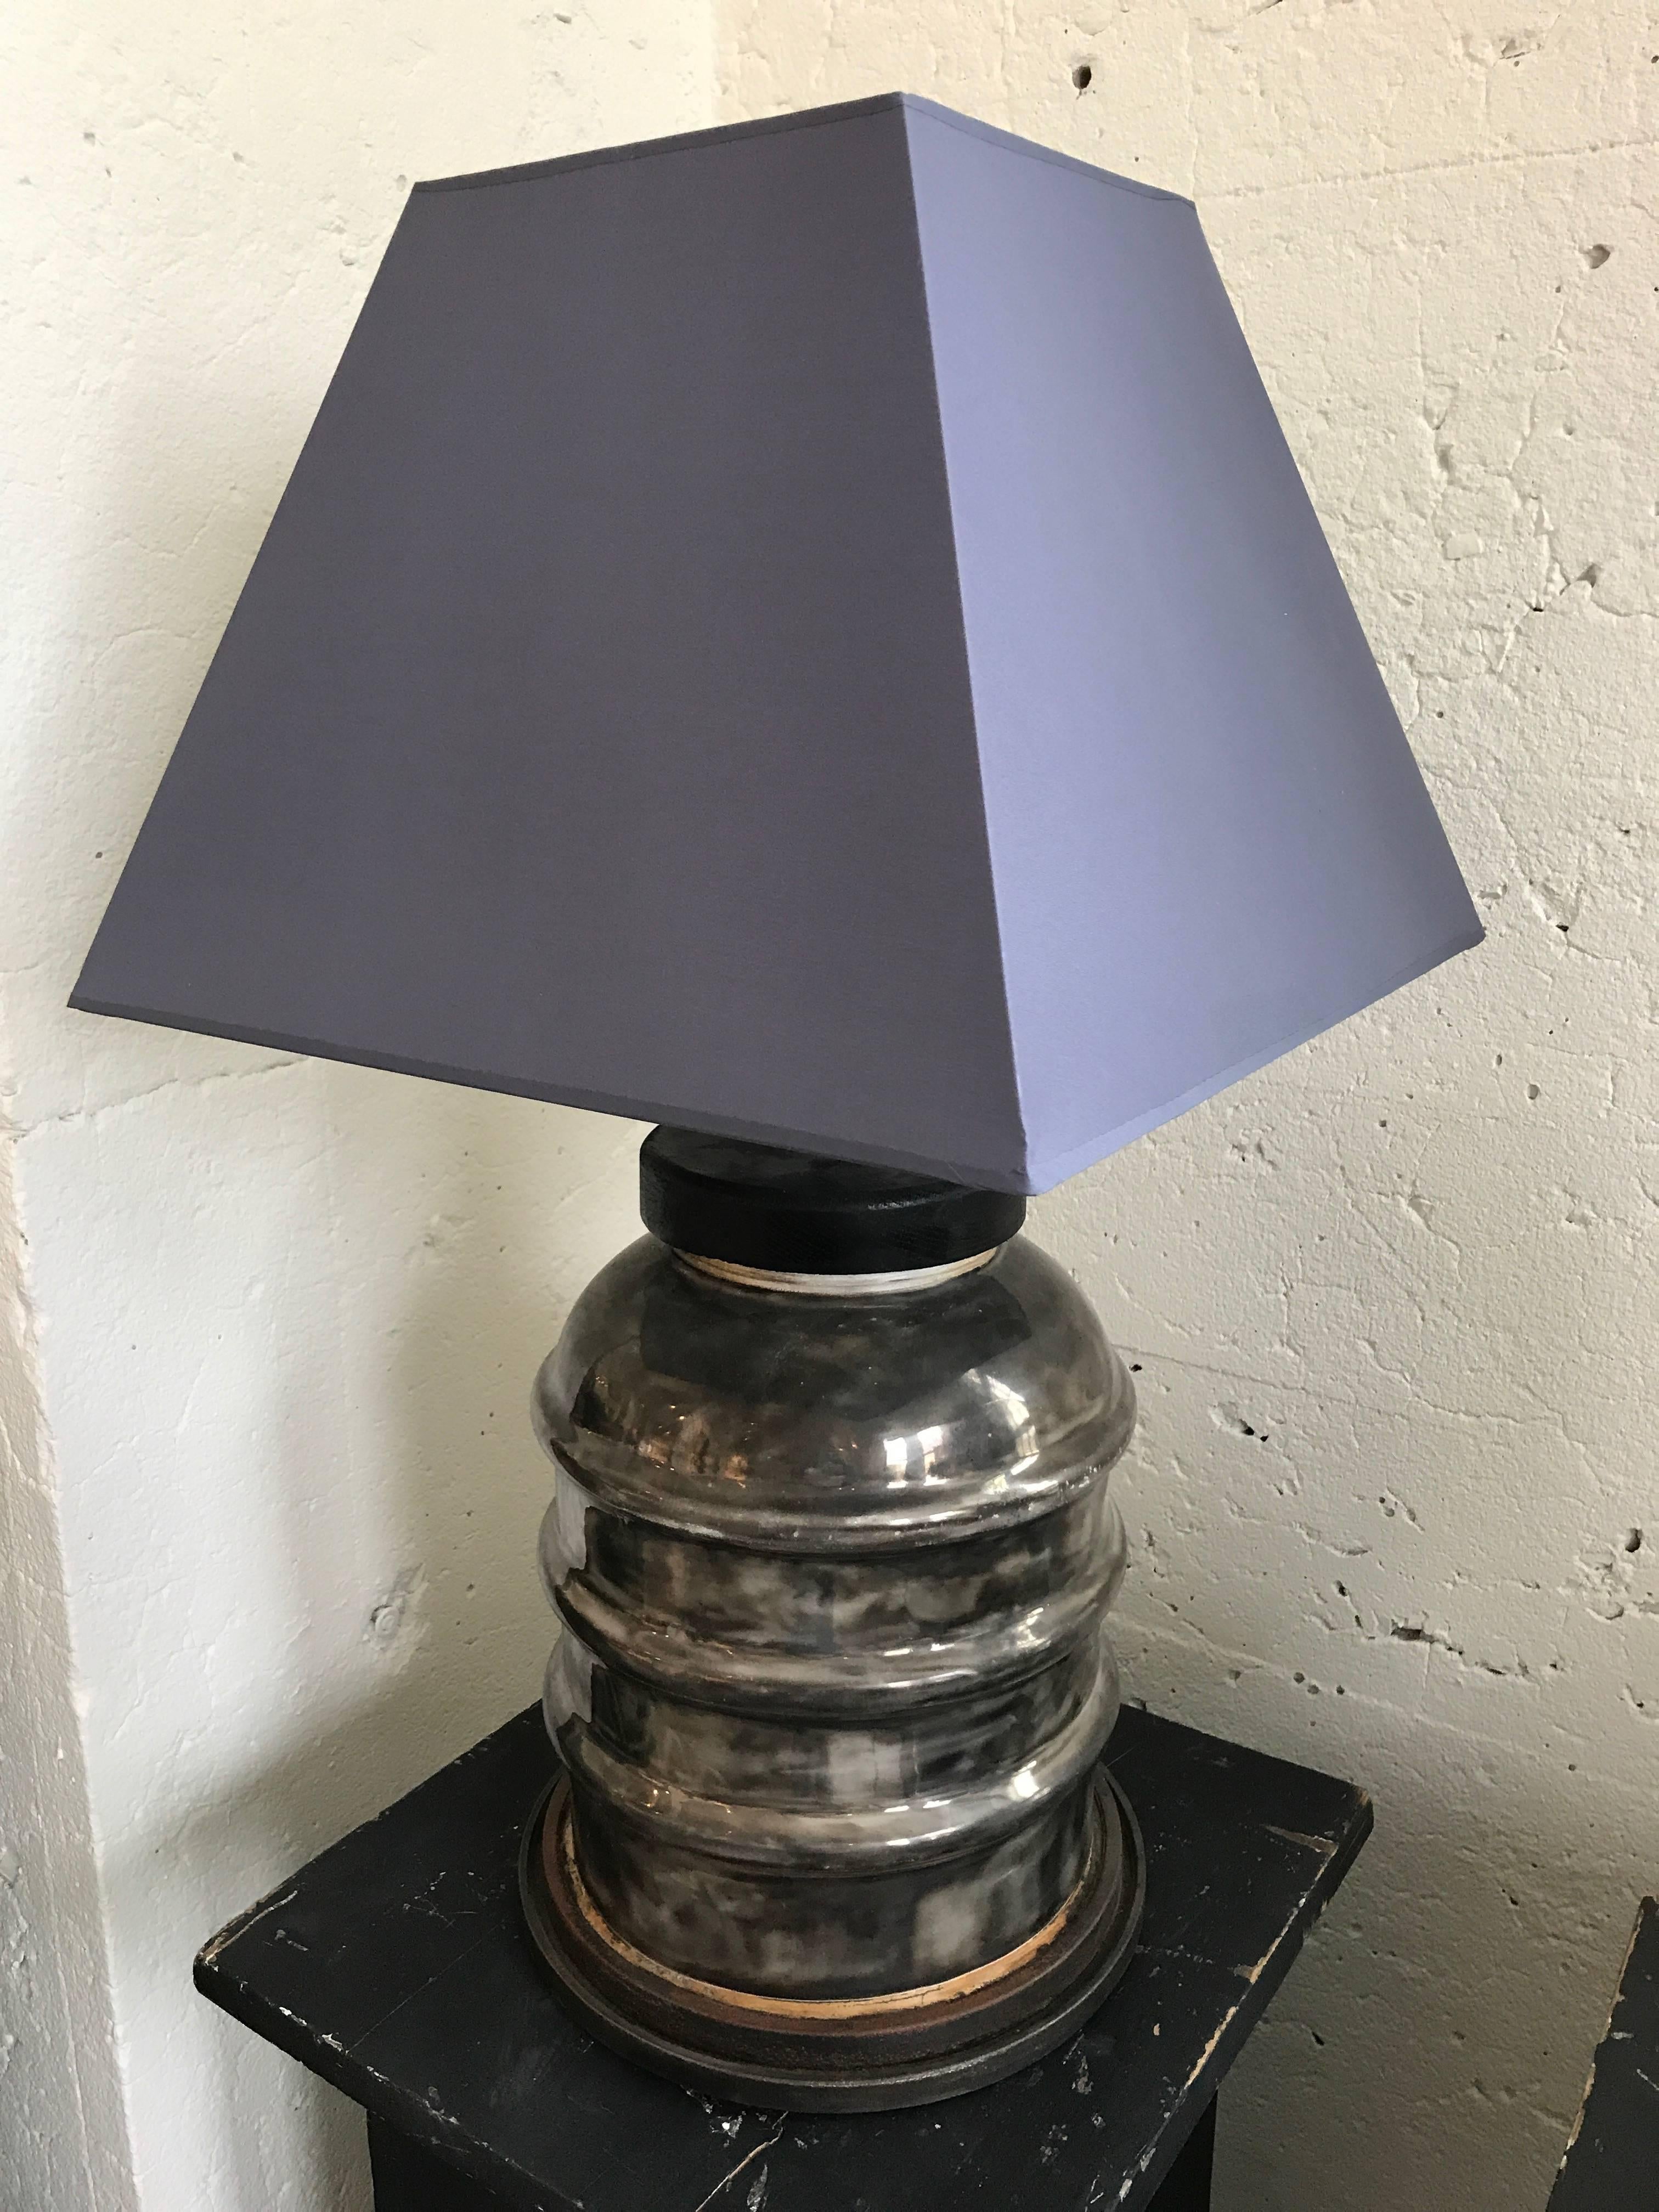 Ceramic isolant lamp with shade.